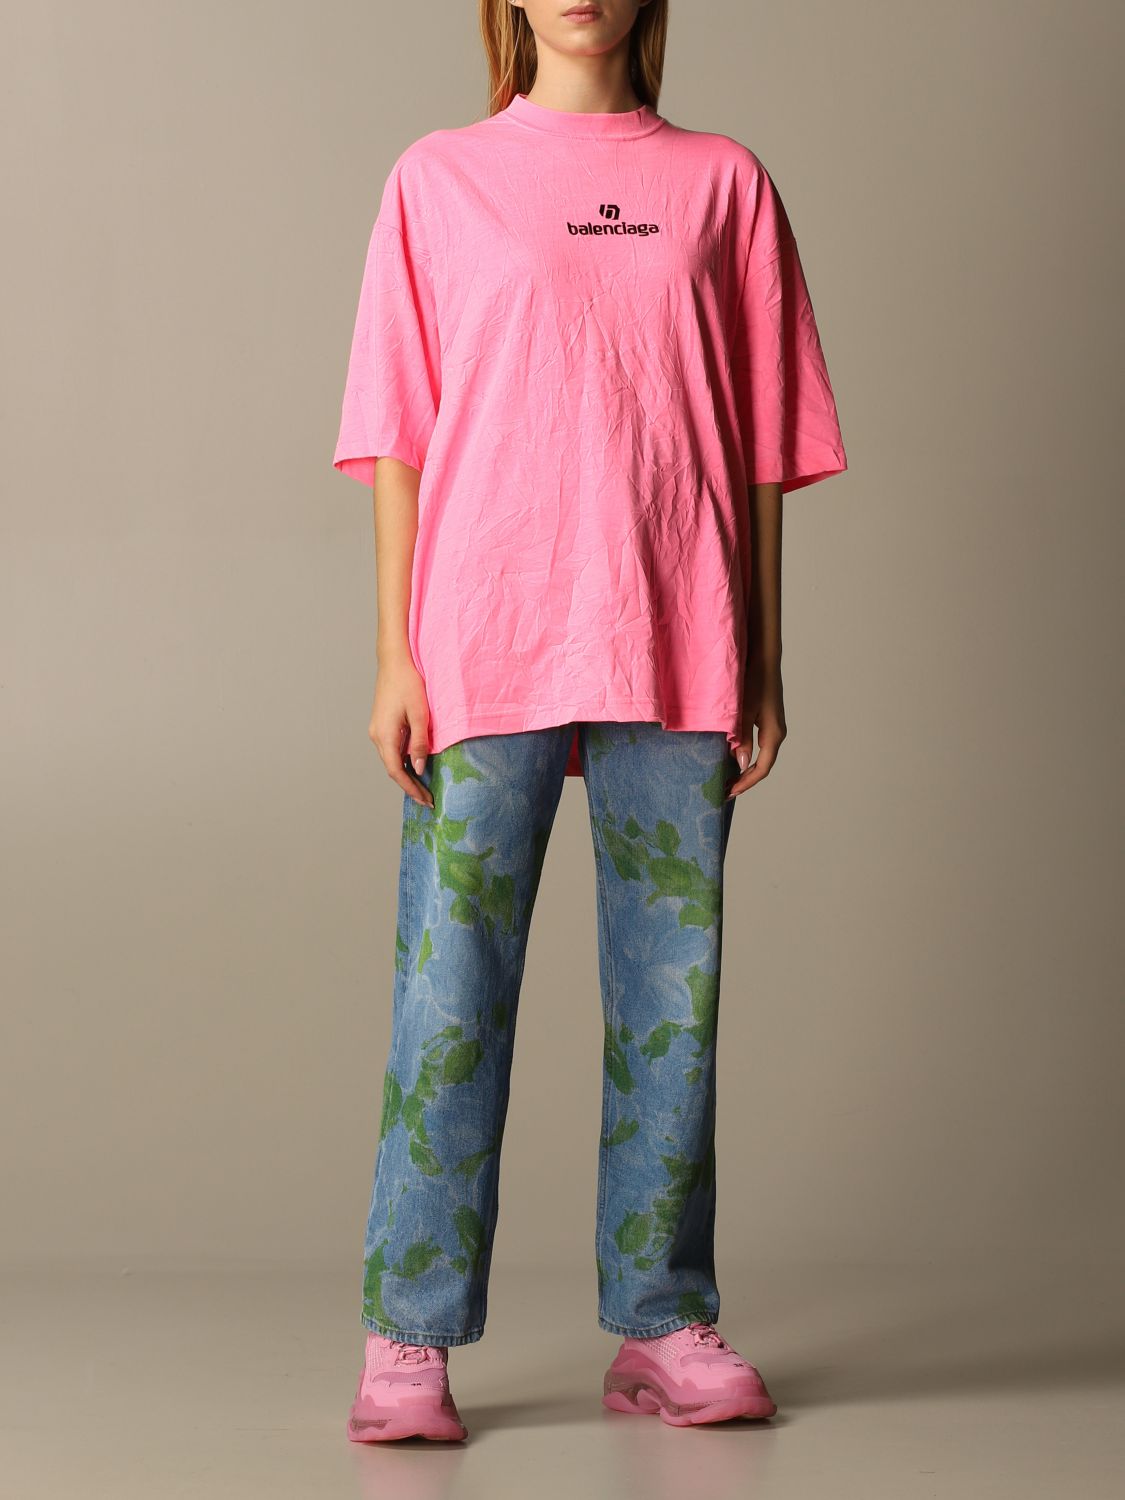 BALENCIAGA: T-shirt women - Pink | T-Shirt Balenciaga 641532 TJVA9 ...